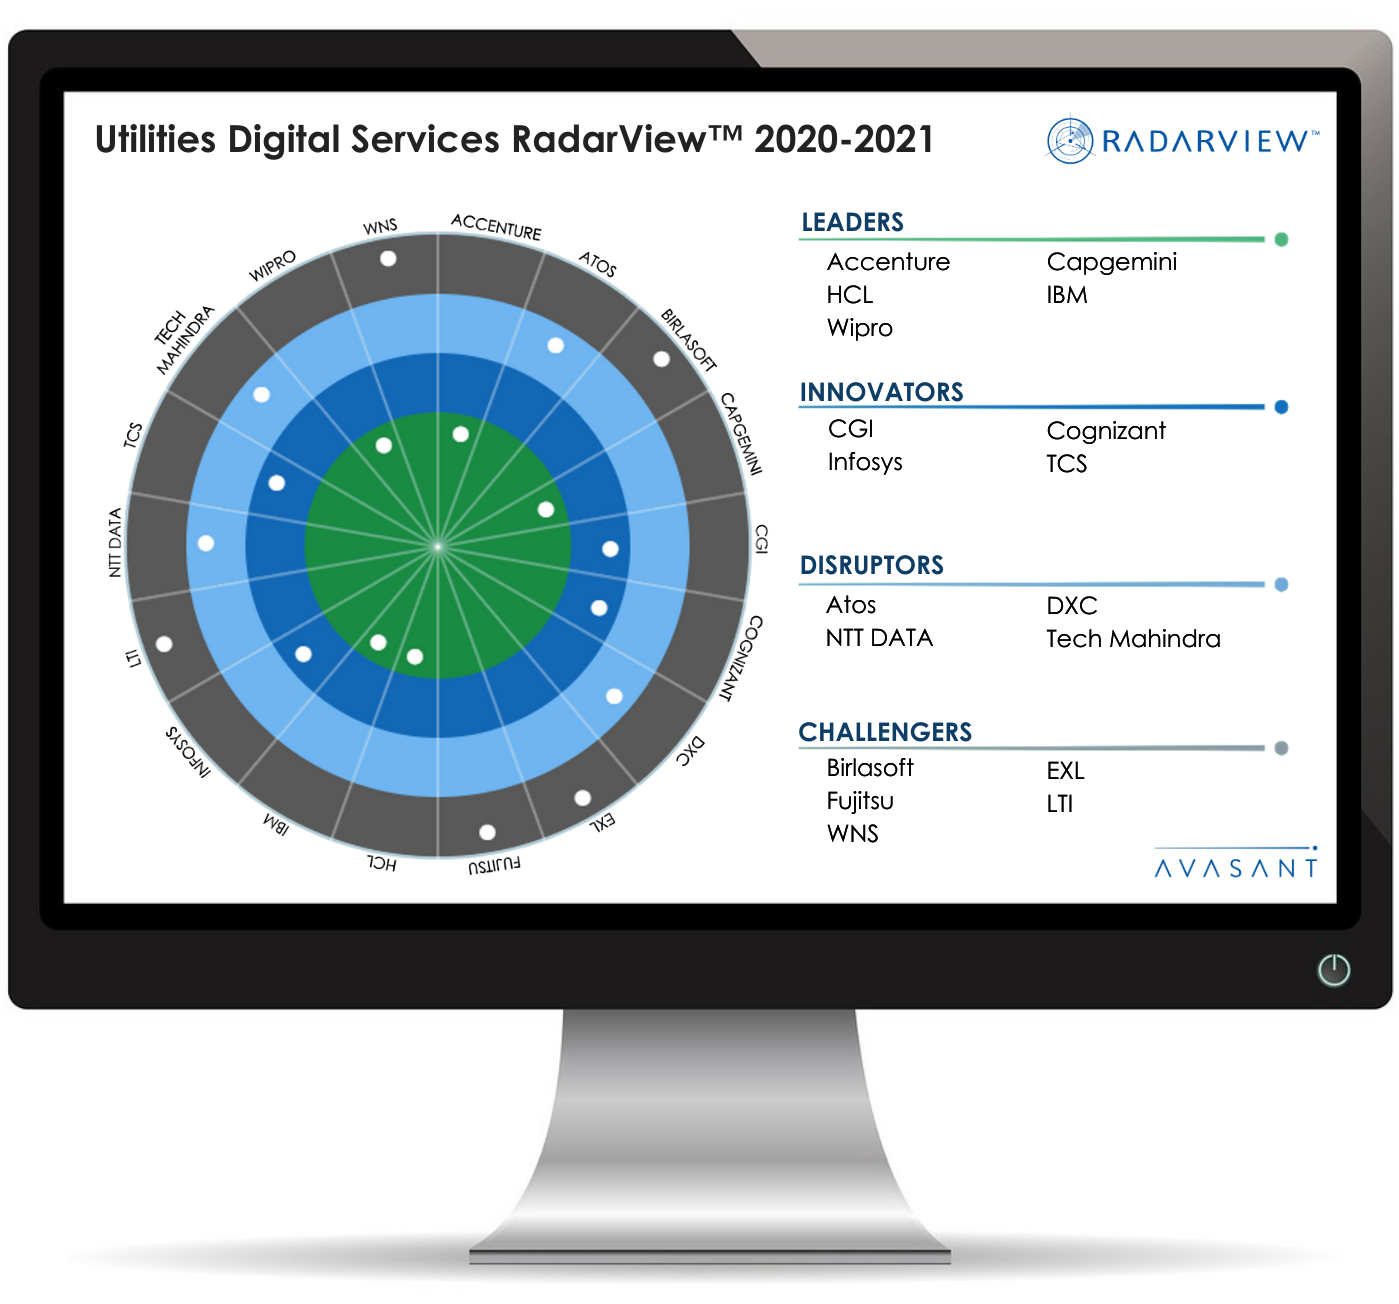 Utilities RV 1 - Utilities Digital Services RadarView™ 2020-2021 - HCL